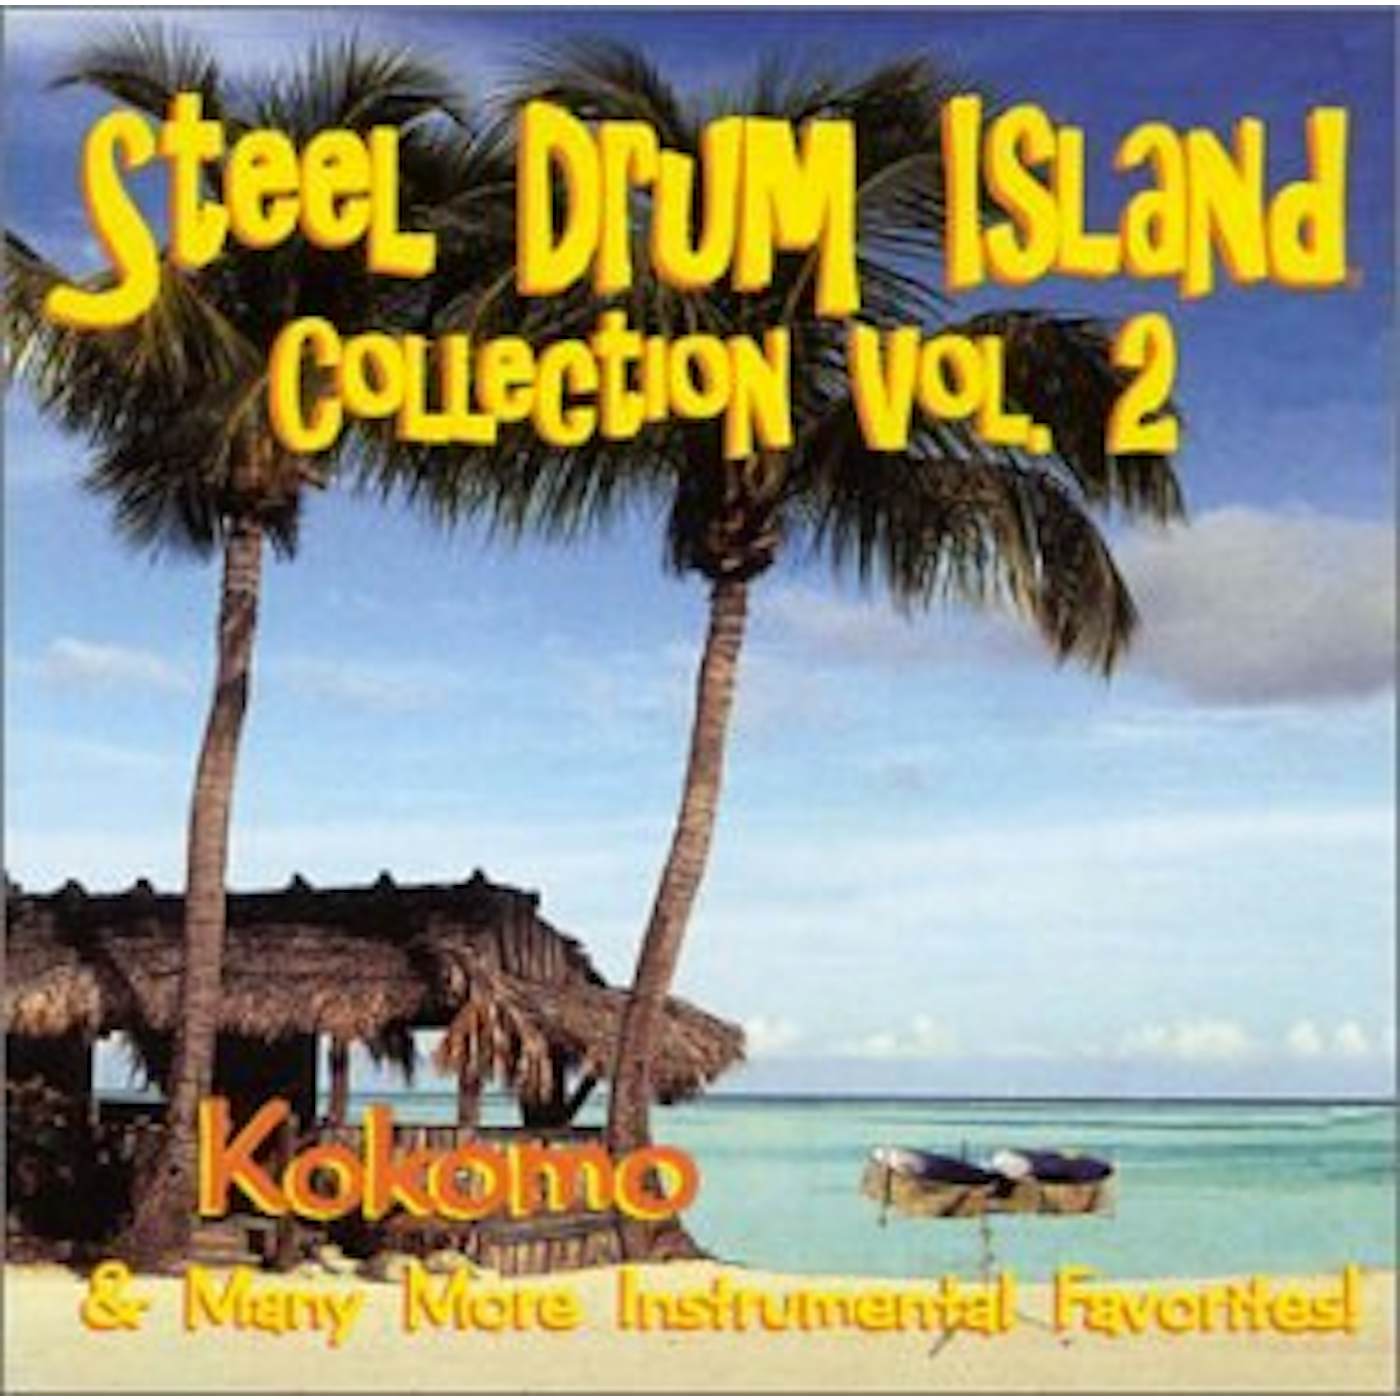 STEEL DRUM ISLAND COLLECTION: KOKOMO & MORE ON CD